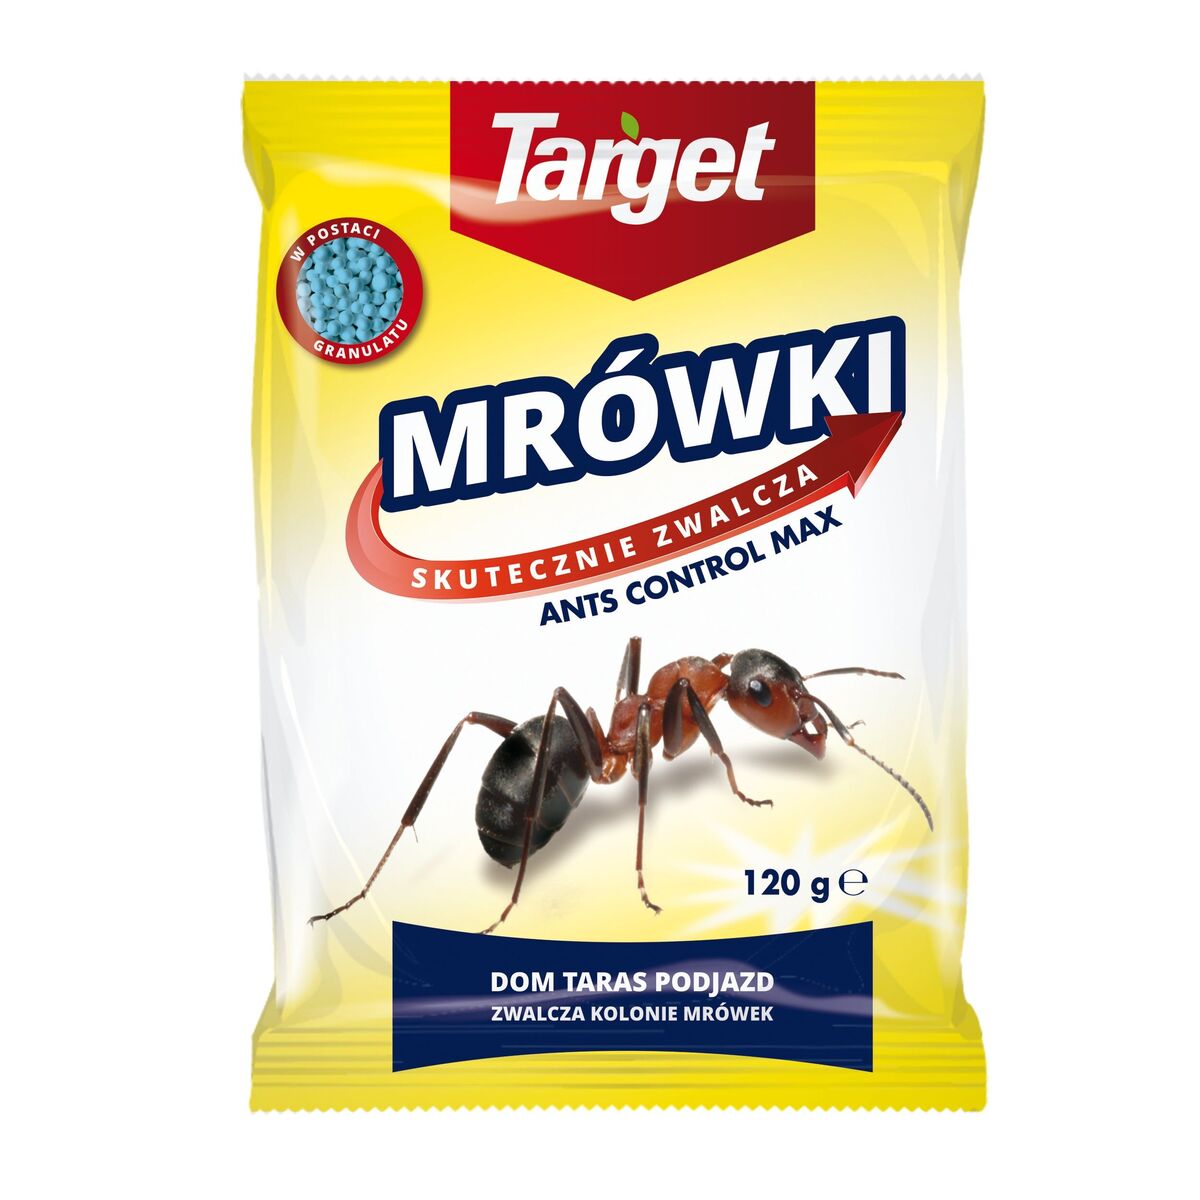 Środek na mrówki granulat 120g Ants control Max Target